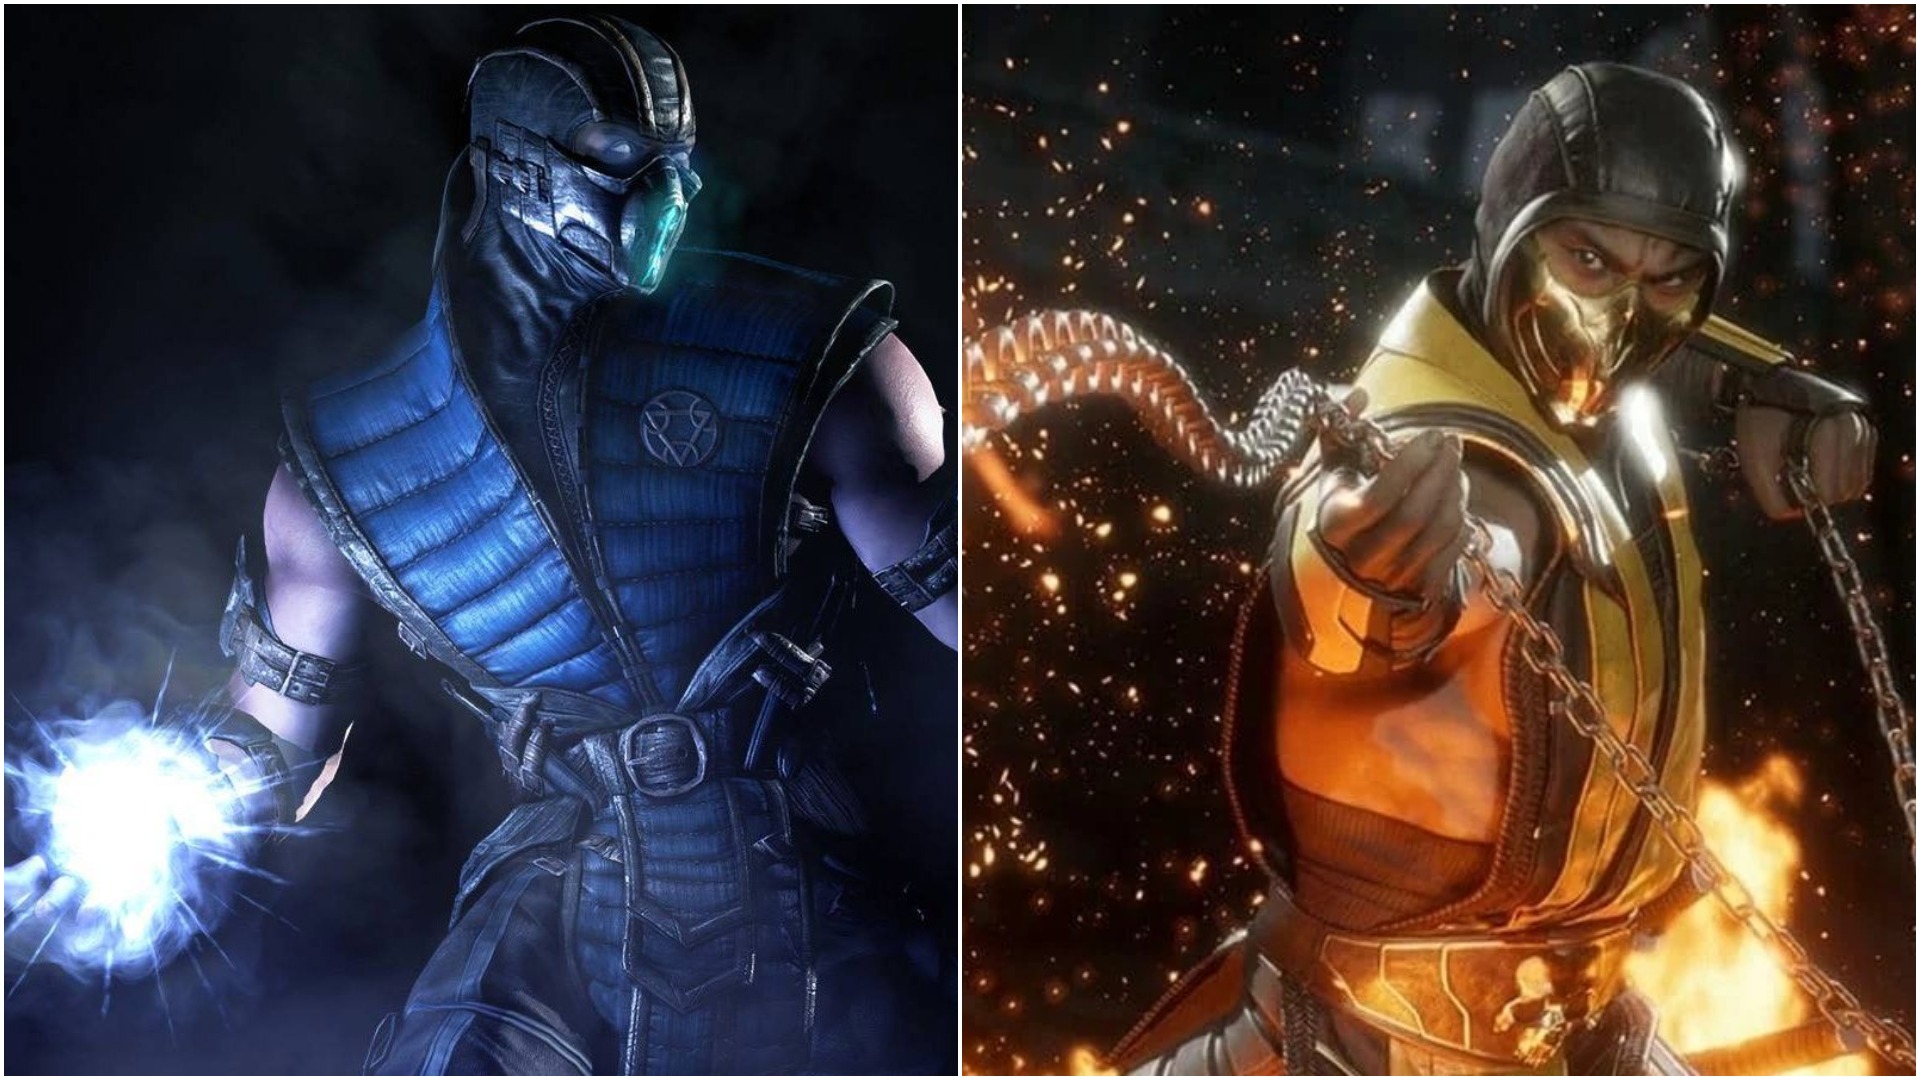 Scorpion (Mortal Kombat) - Incredible Characters Wiki